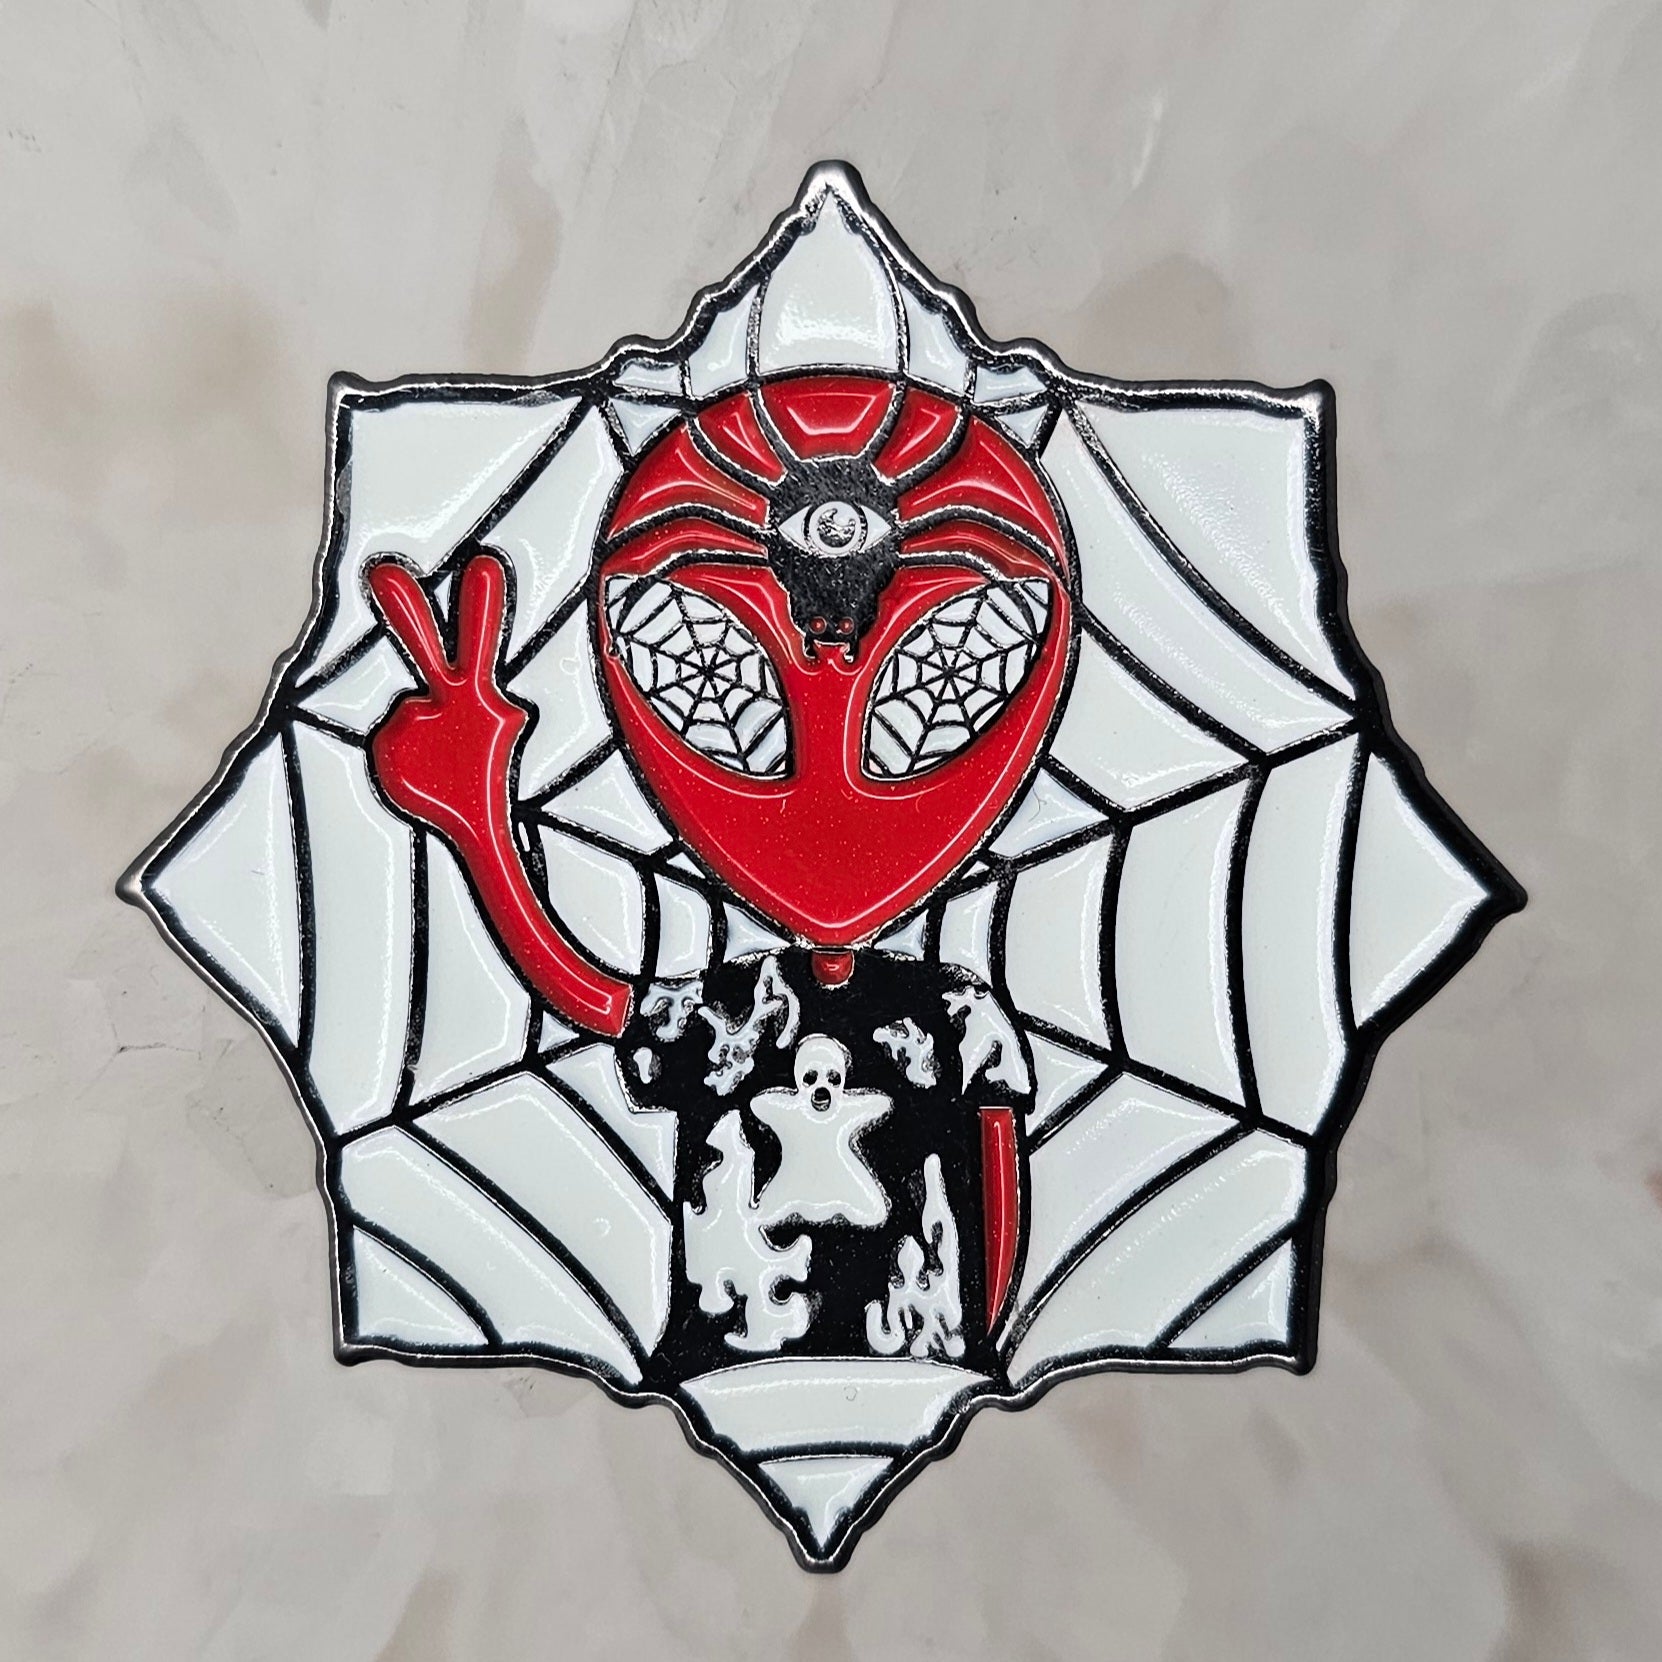 Creepy Third Eye Martian Spider Web Ghost Ufo Enamel Pins Hat Pins Lapel Pin Brooch Badge Festival Pin